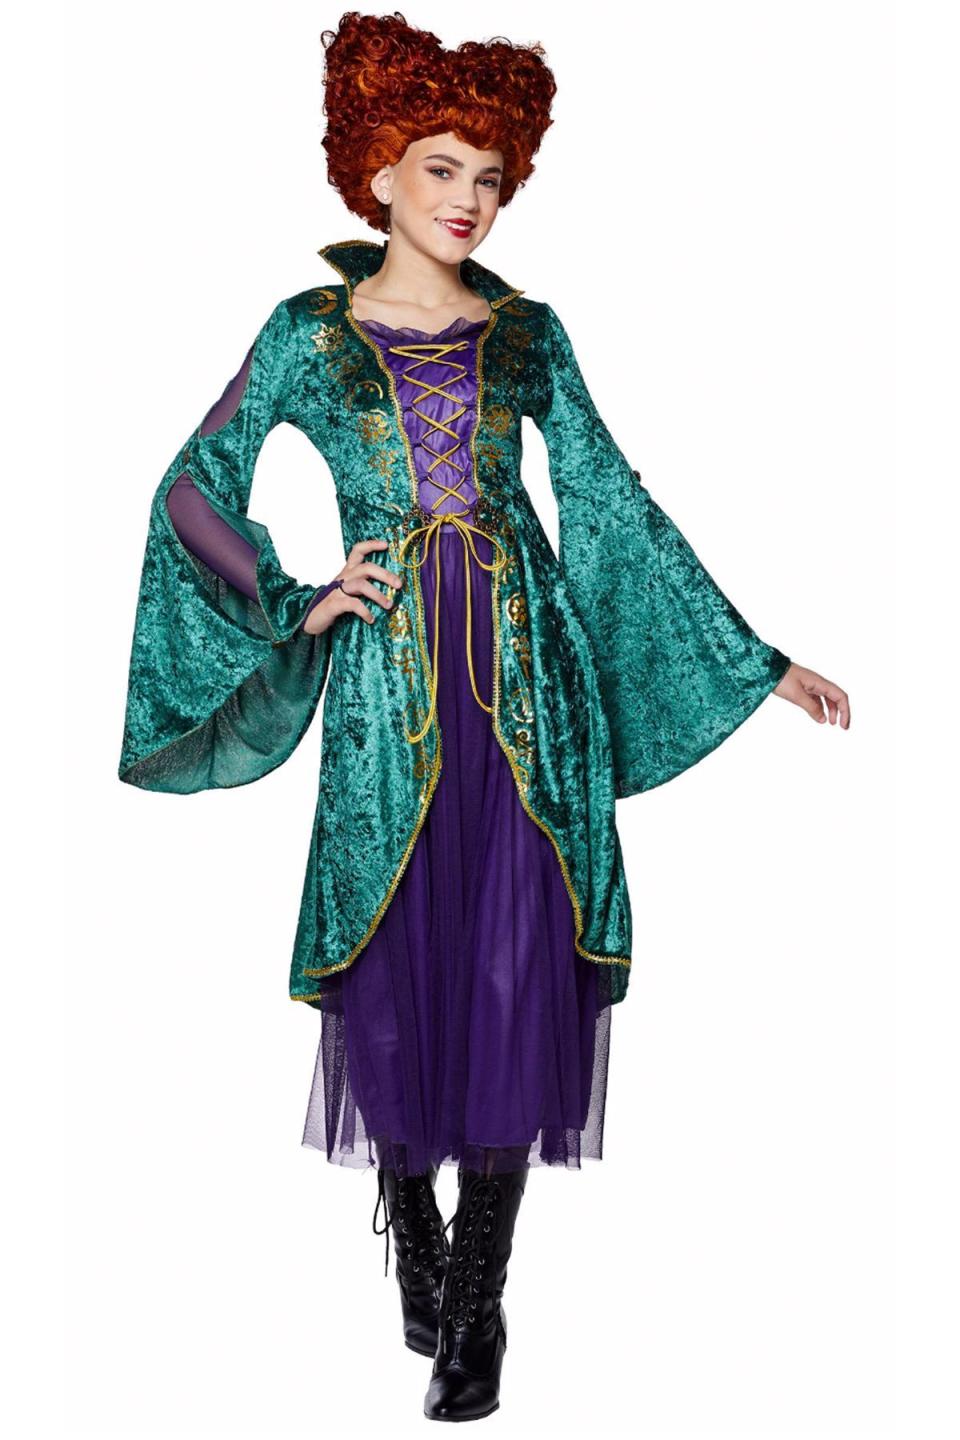 2) Winifred Sanderson Costume (Tween)